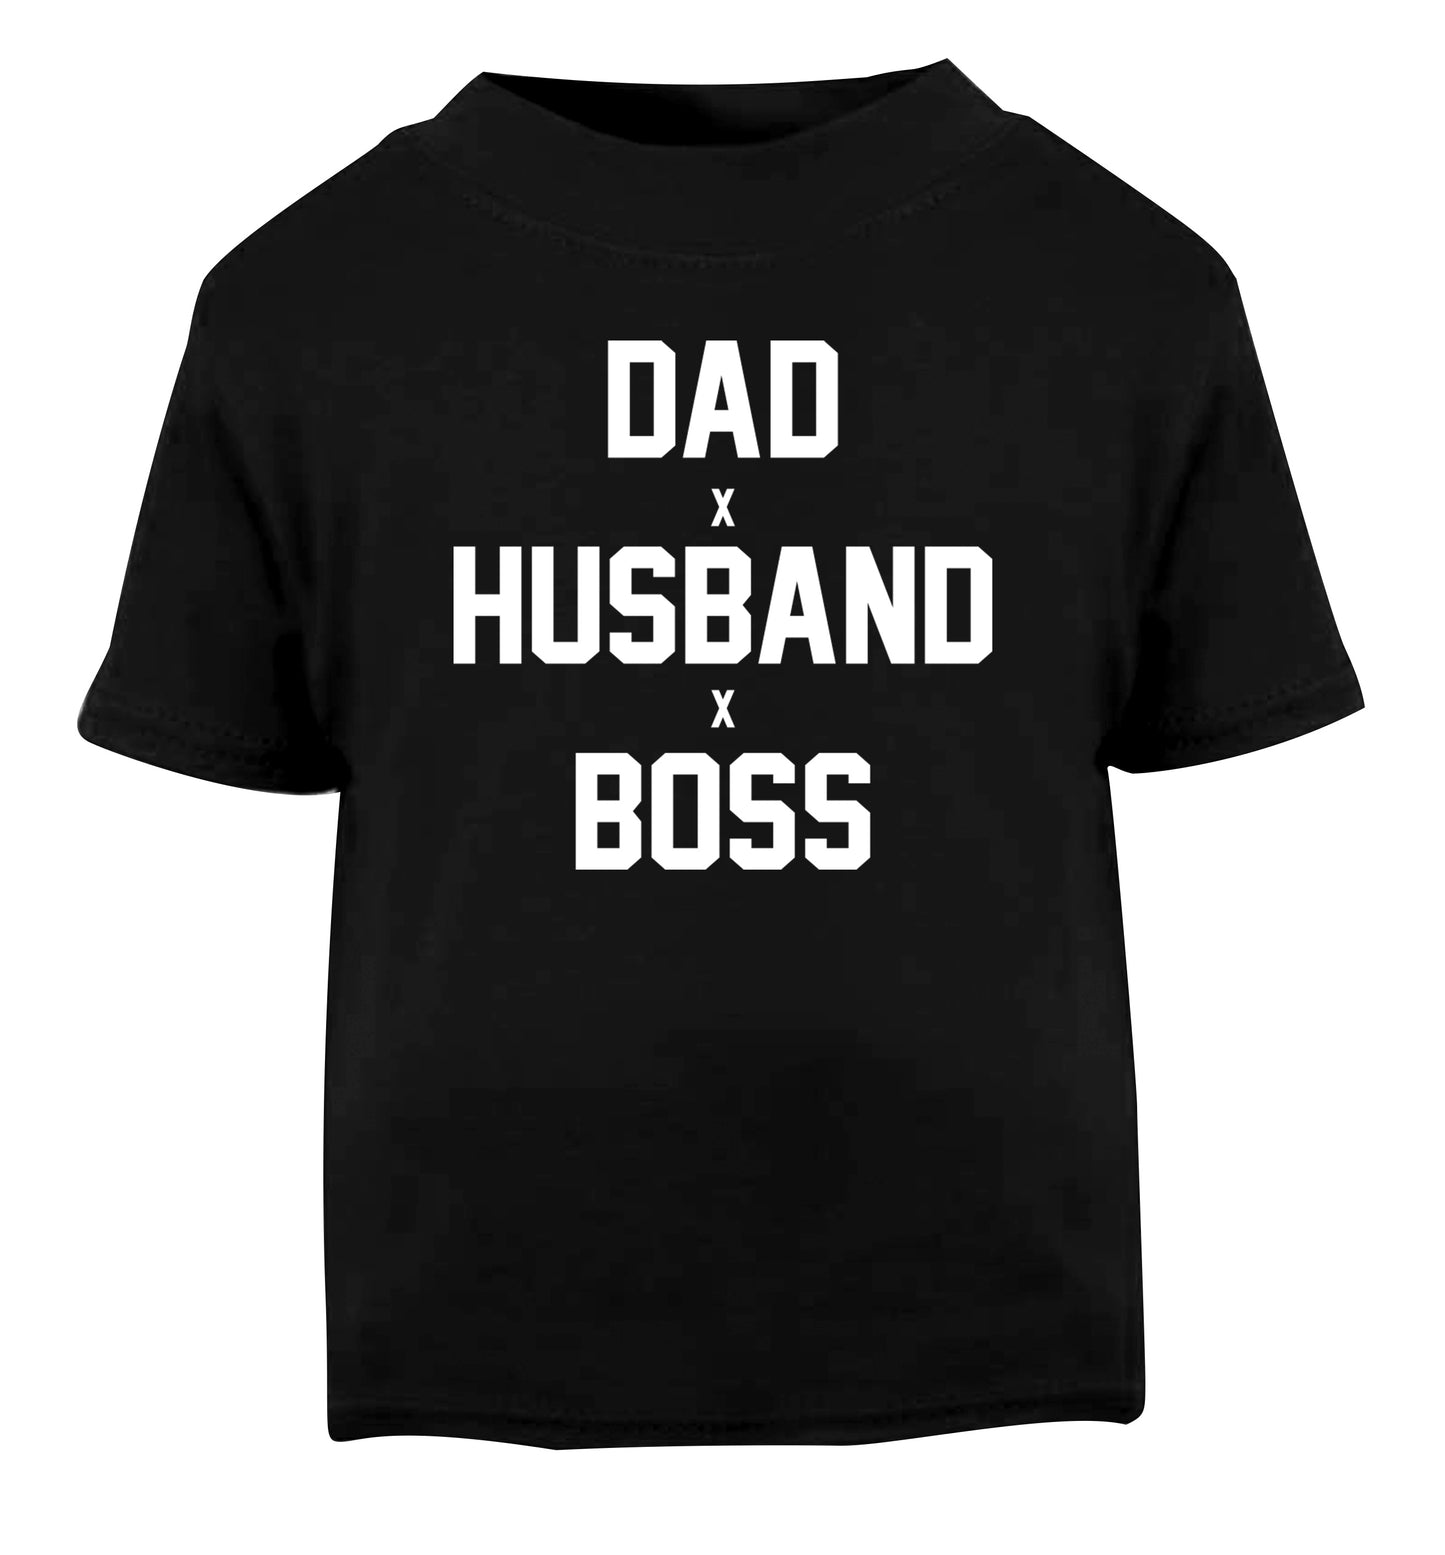 Dad husband boss Black Baby Toddler Tshirt 2 years